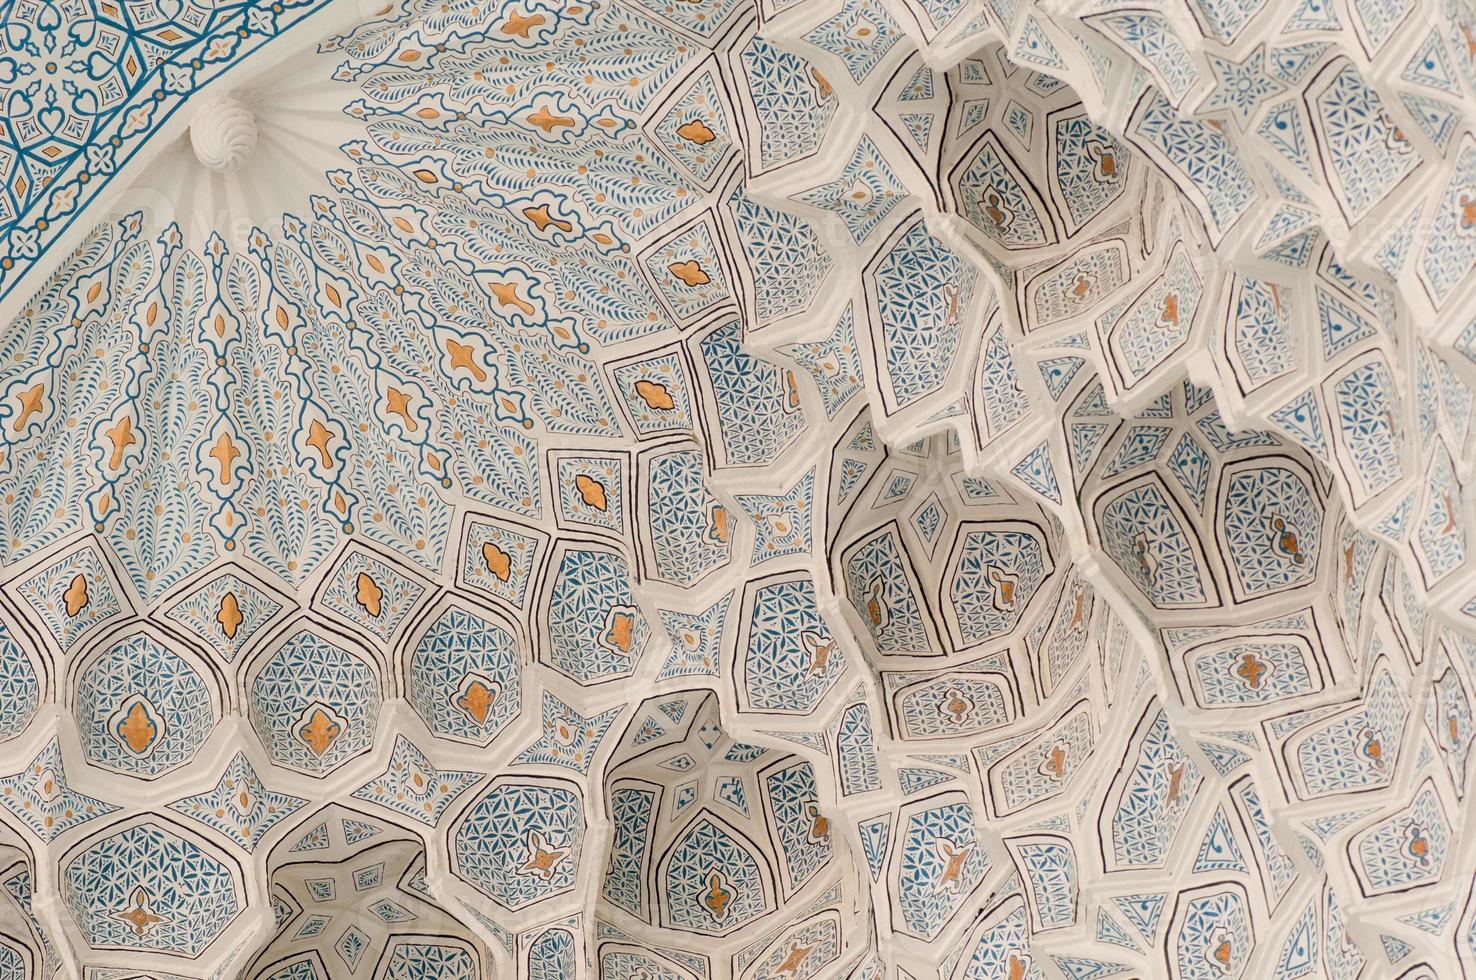 teto semicircular esculpido com ornamentos asiáticos antigos. os detalhes da arquitetura da ásia central medieval foto